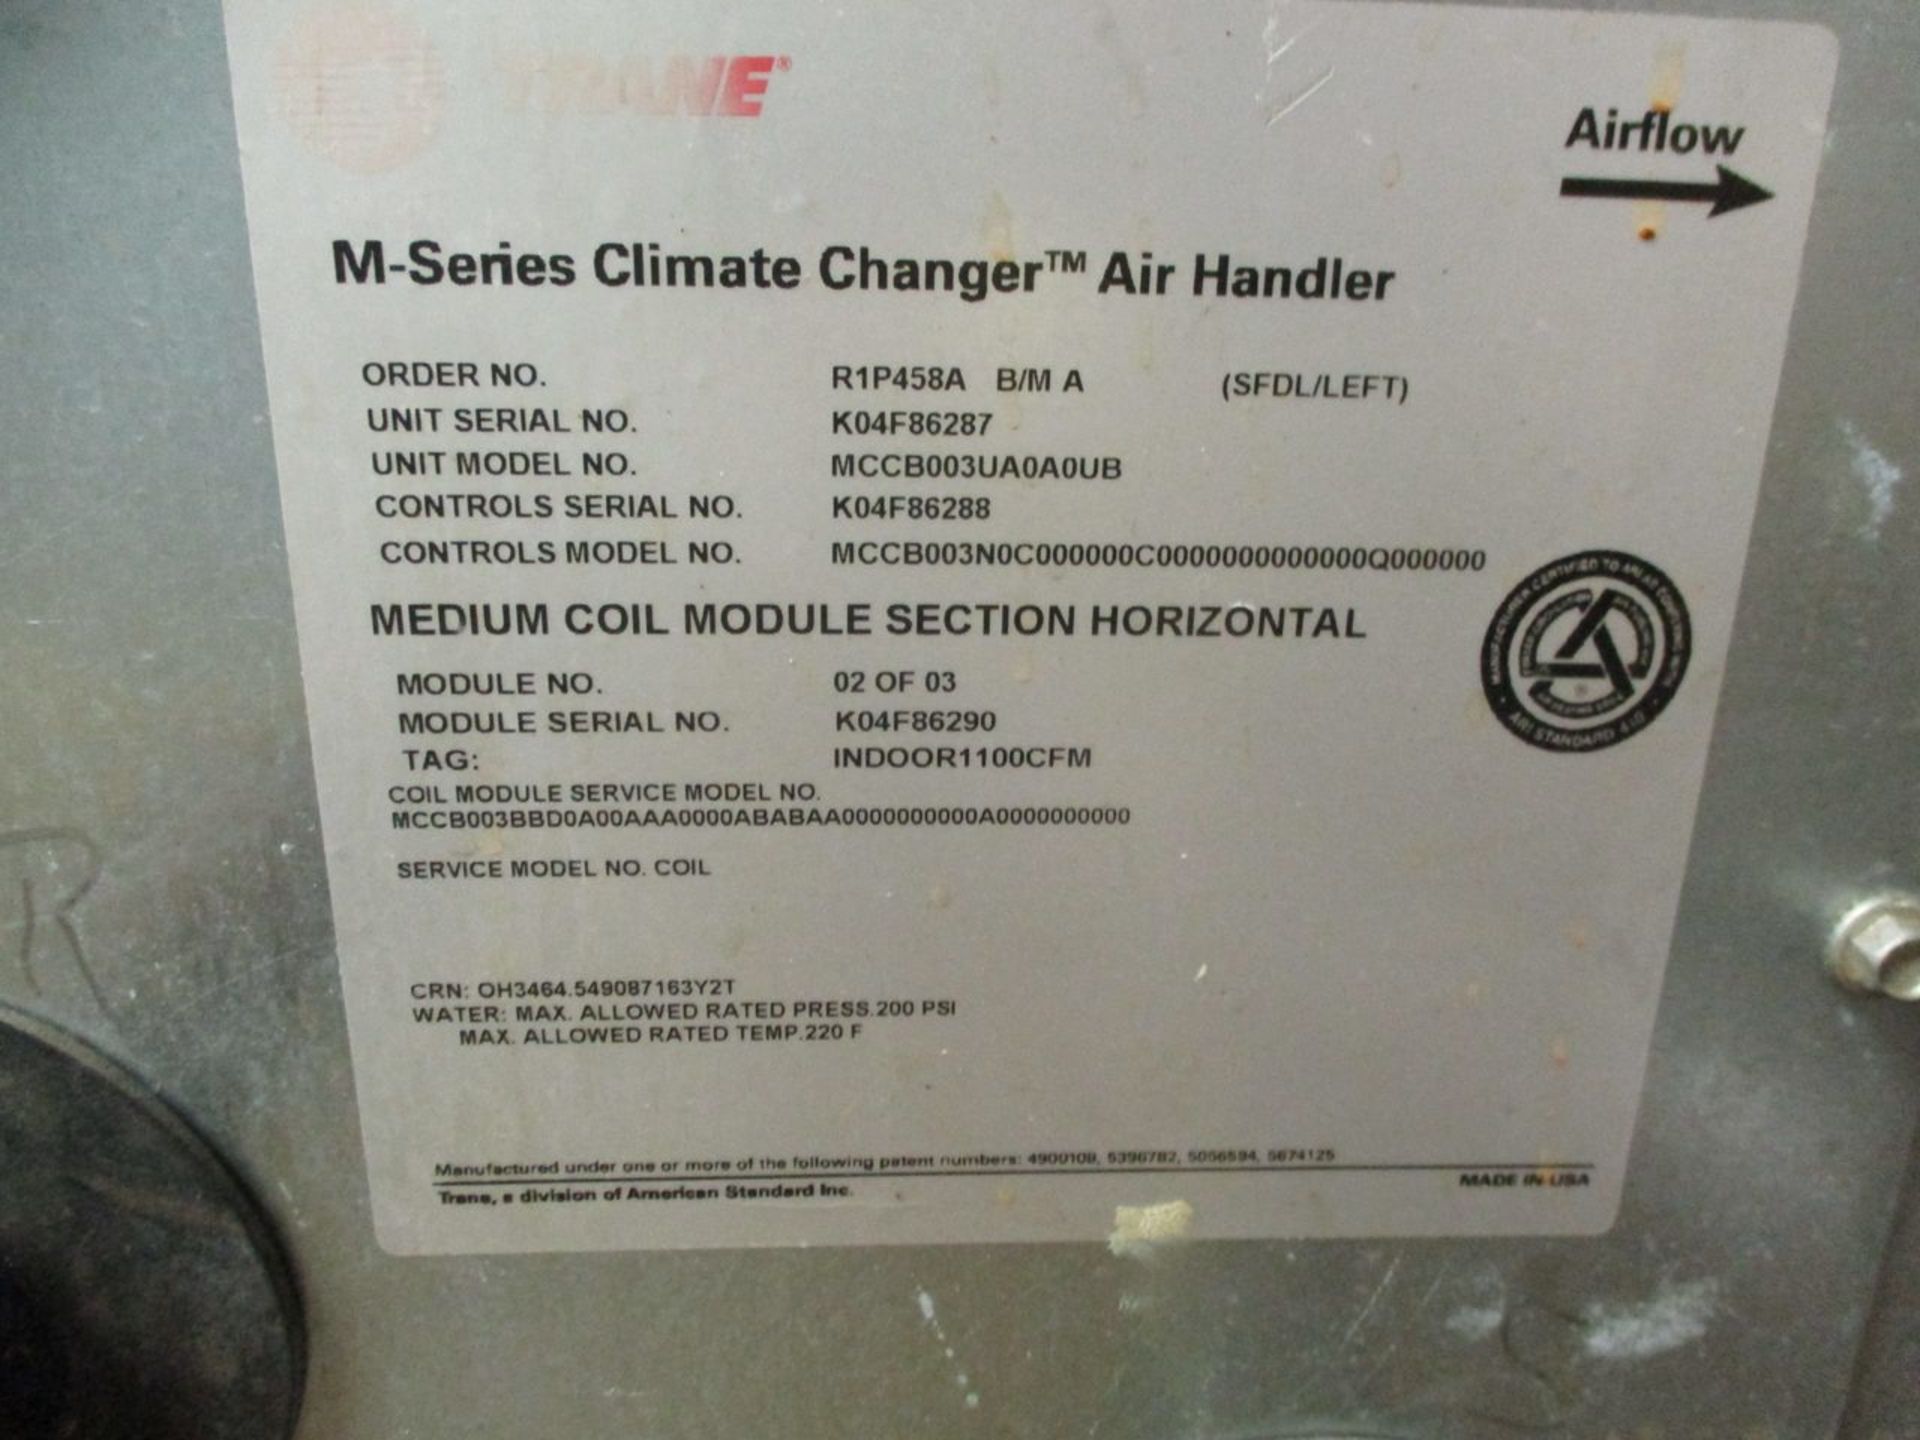 Trane MCCB003UA0A0UB M-Series Climate Changer Air Handler, S/N K04F86287 (MP33296) (Basement BX-46) - Image 2 of 2